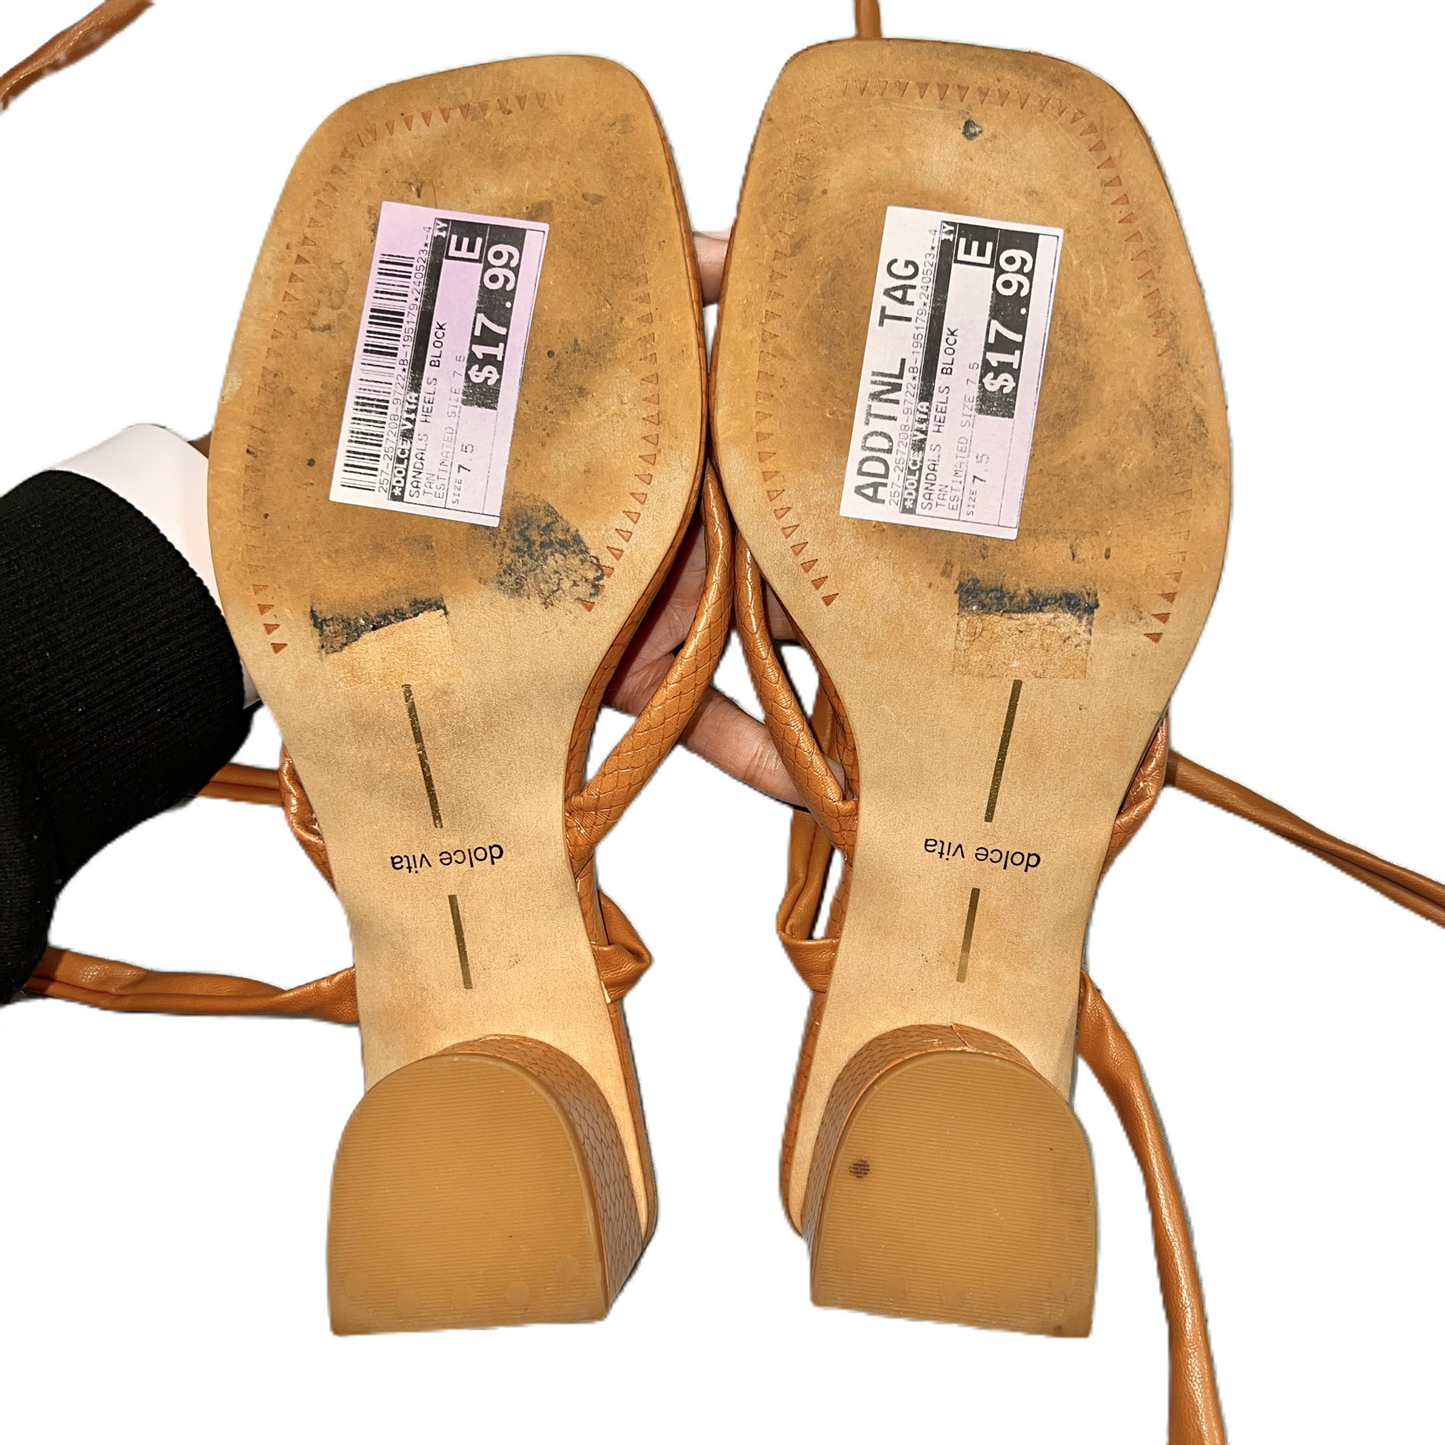 Tan Sandals Heels Block By Dolce Vita, Size: 7.5